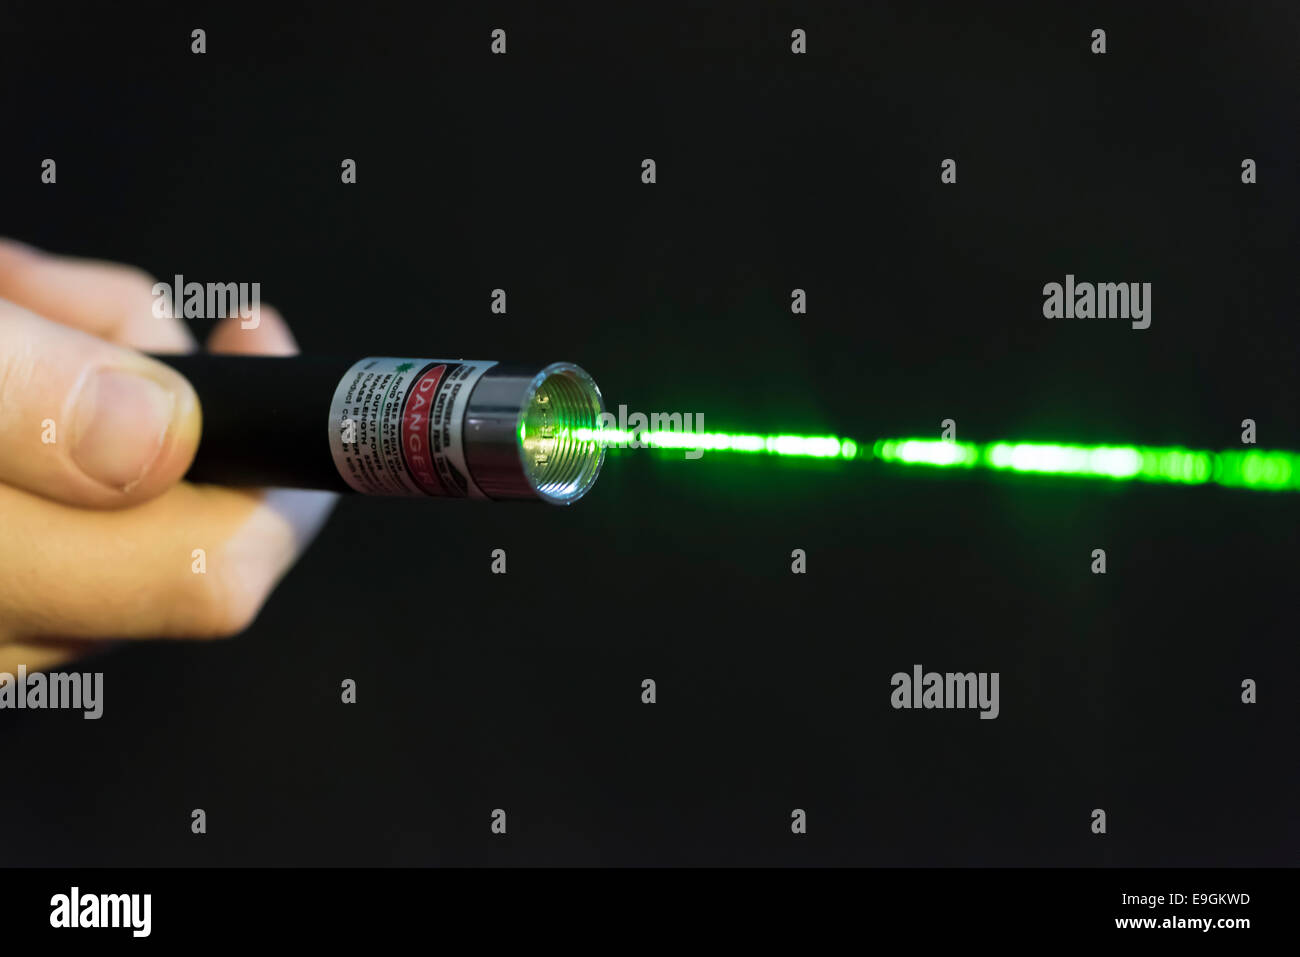 Colore verde brillante fascio laser proveniente da un laser